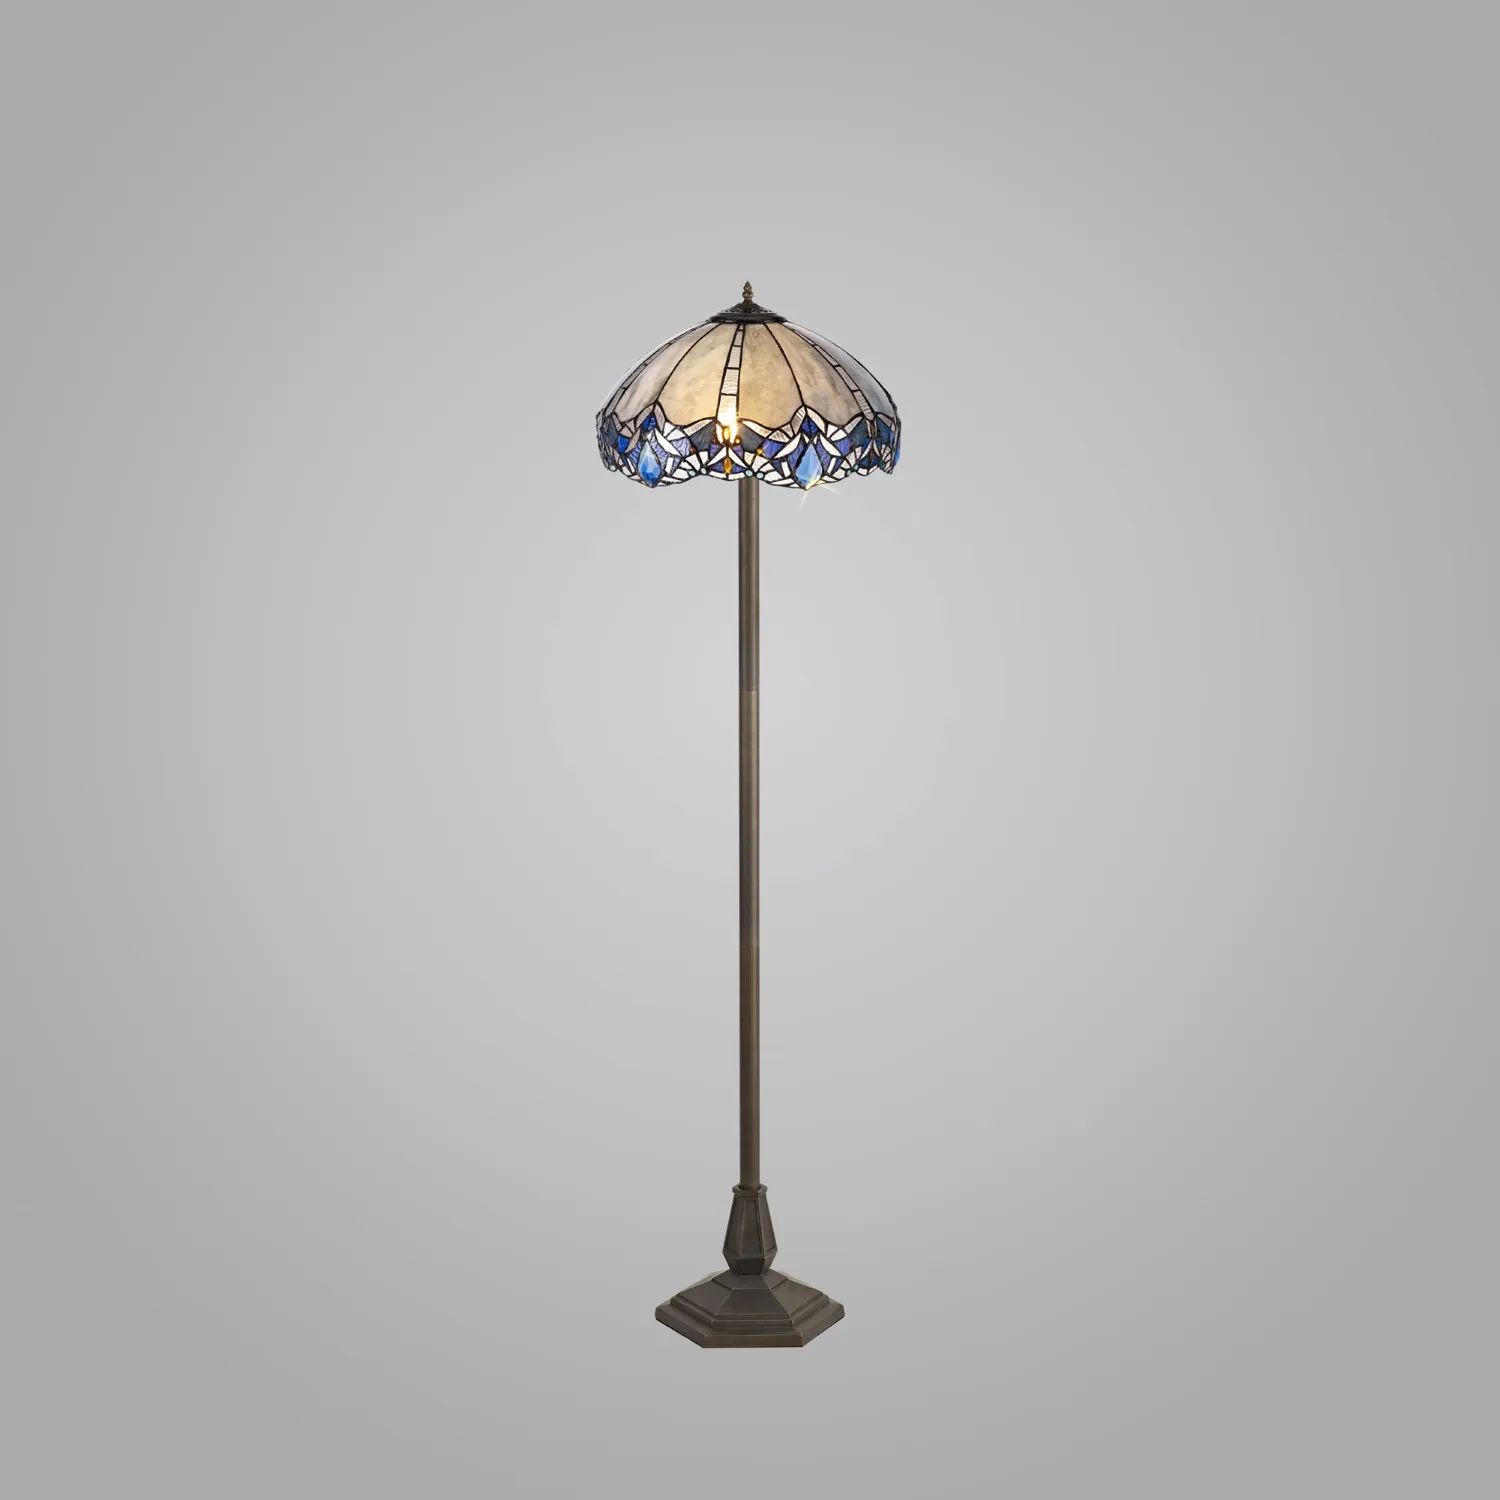 Ardingly 2 Light Octagonal Floor Lamp E27 With 40cm Tiffany Shade, Blue Clear Crystal Aged Antique Brass